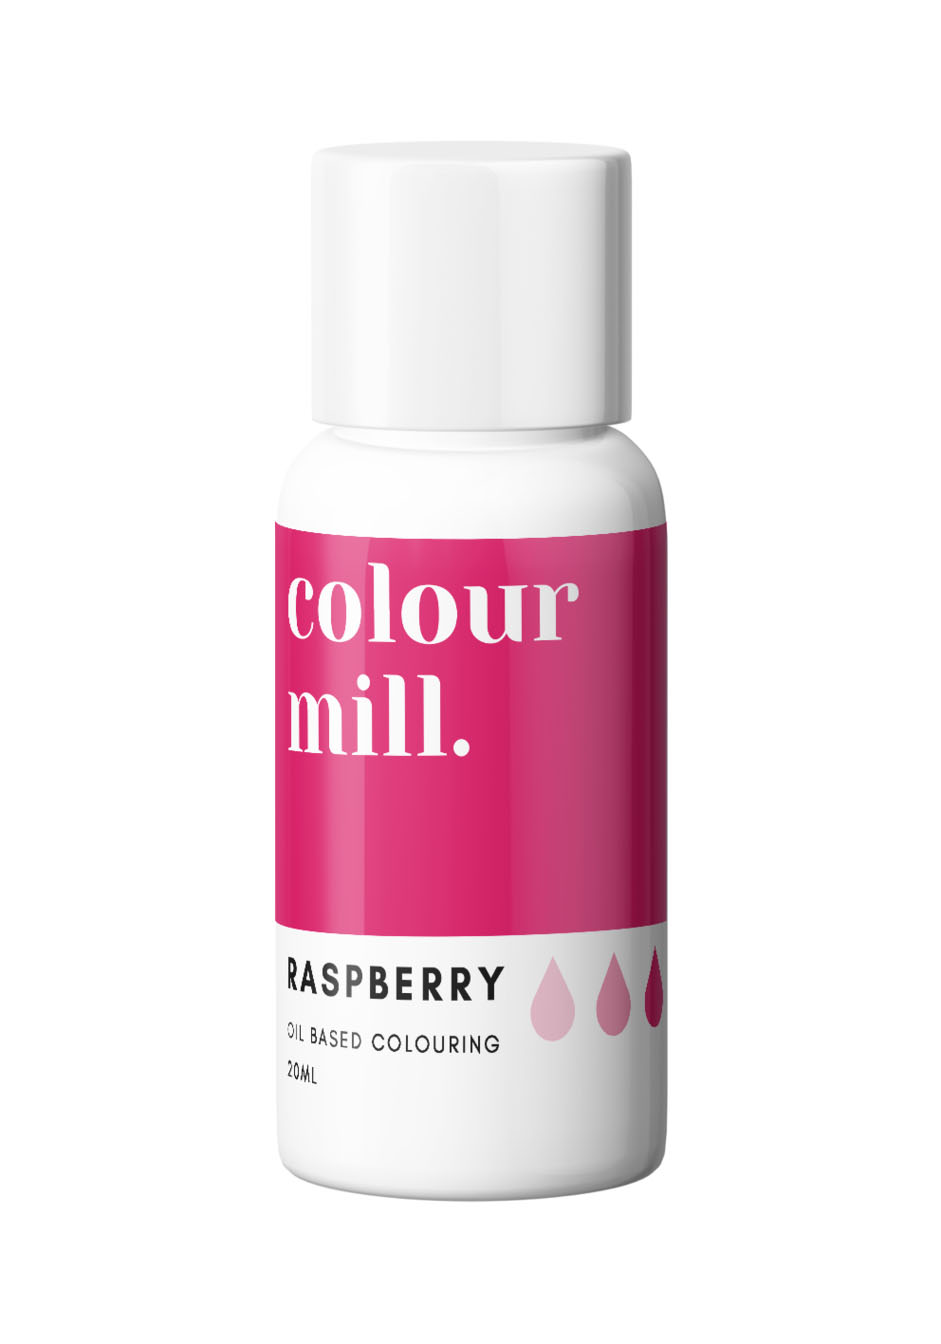 Colour Mill Raspberry Colouring 20ml